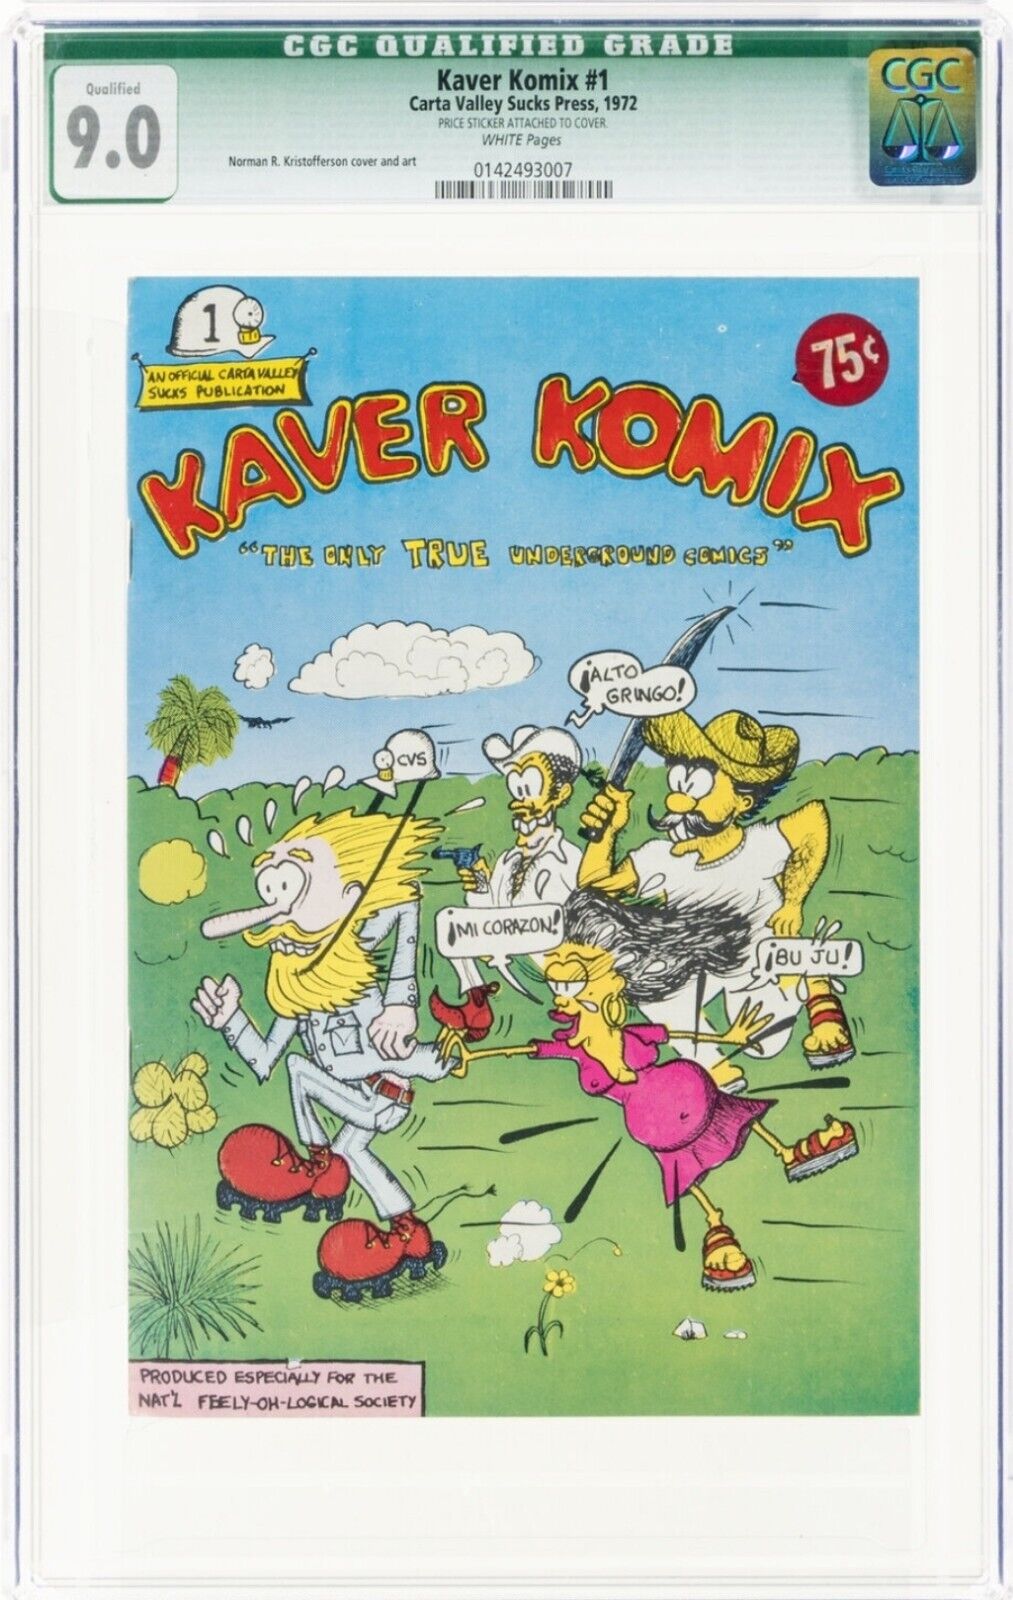 RARE Kaver Komix #1 CGC 9.0 (1972 Carta Valley Sucks Press) High Grade / Low Pop